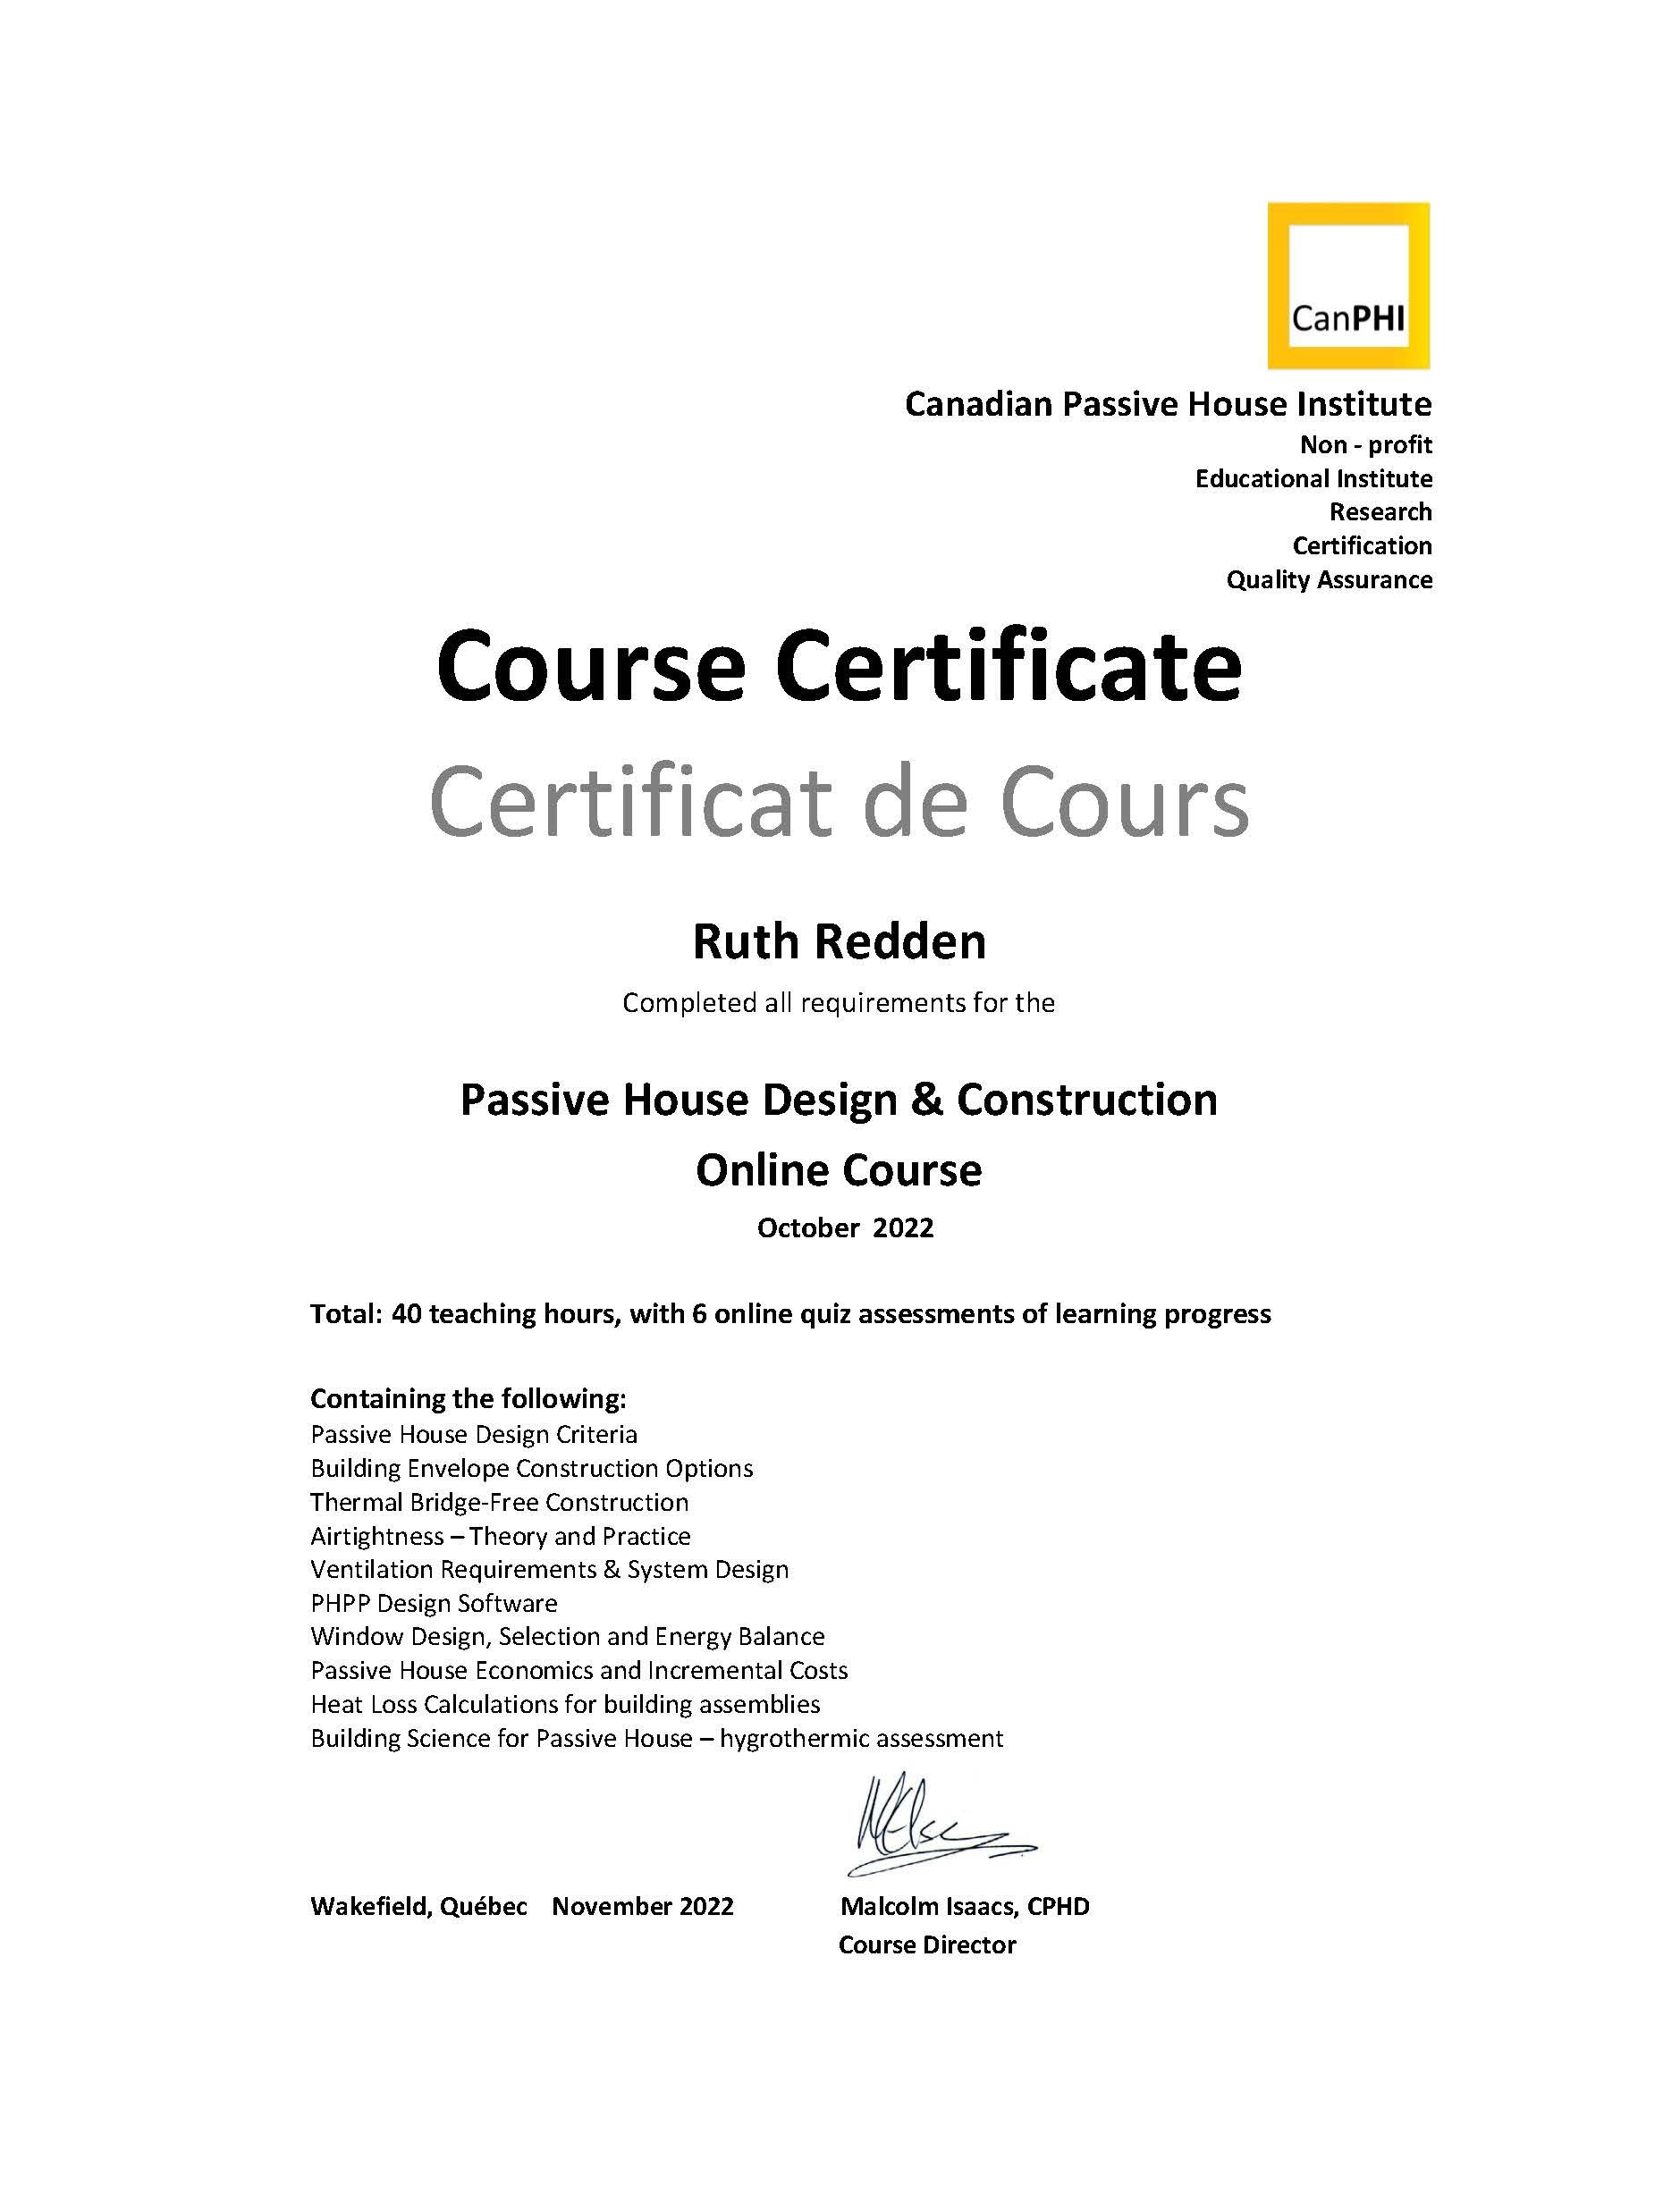 CanPHI_Online Course Certificate_Redden.jpg